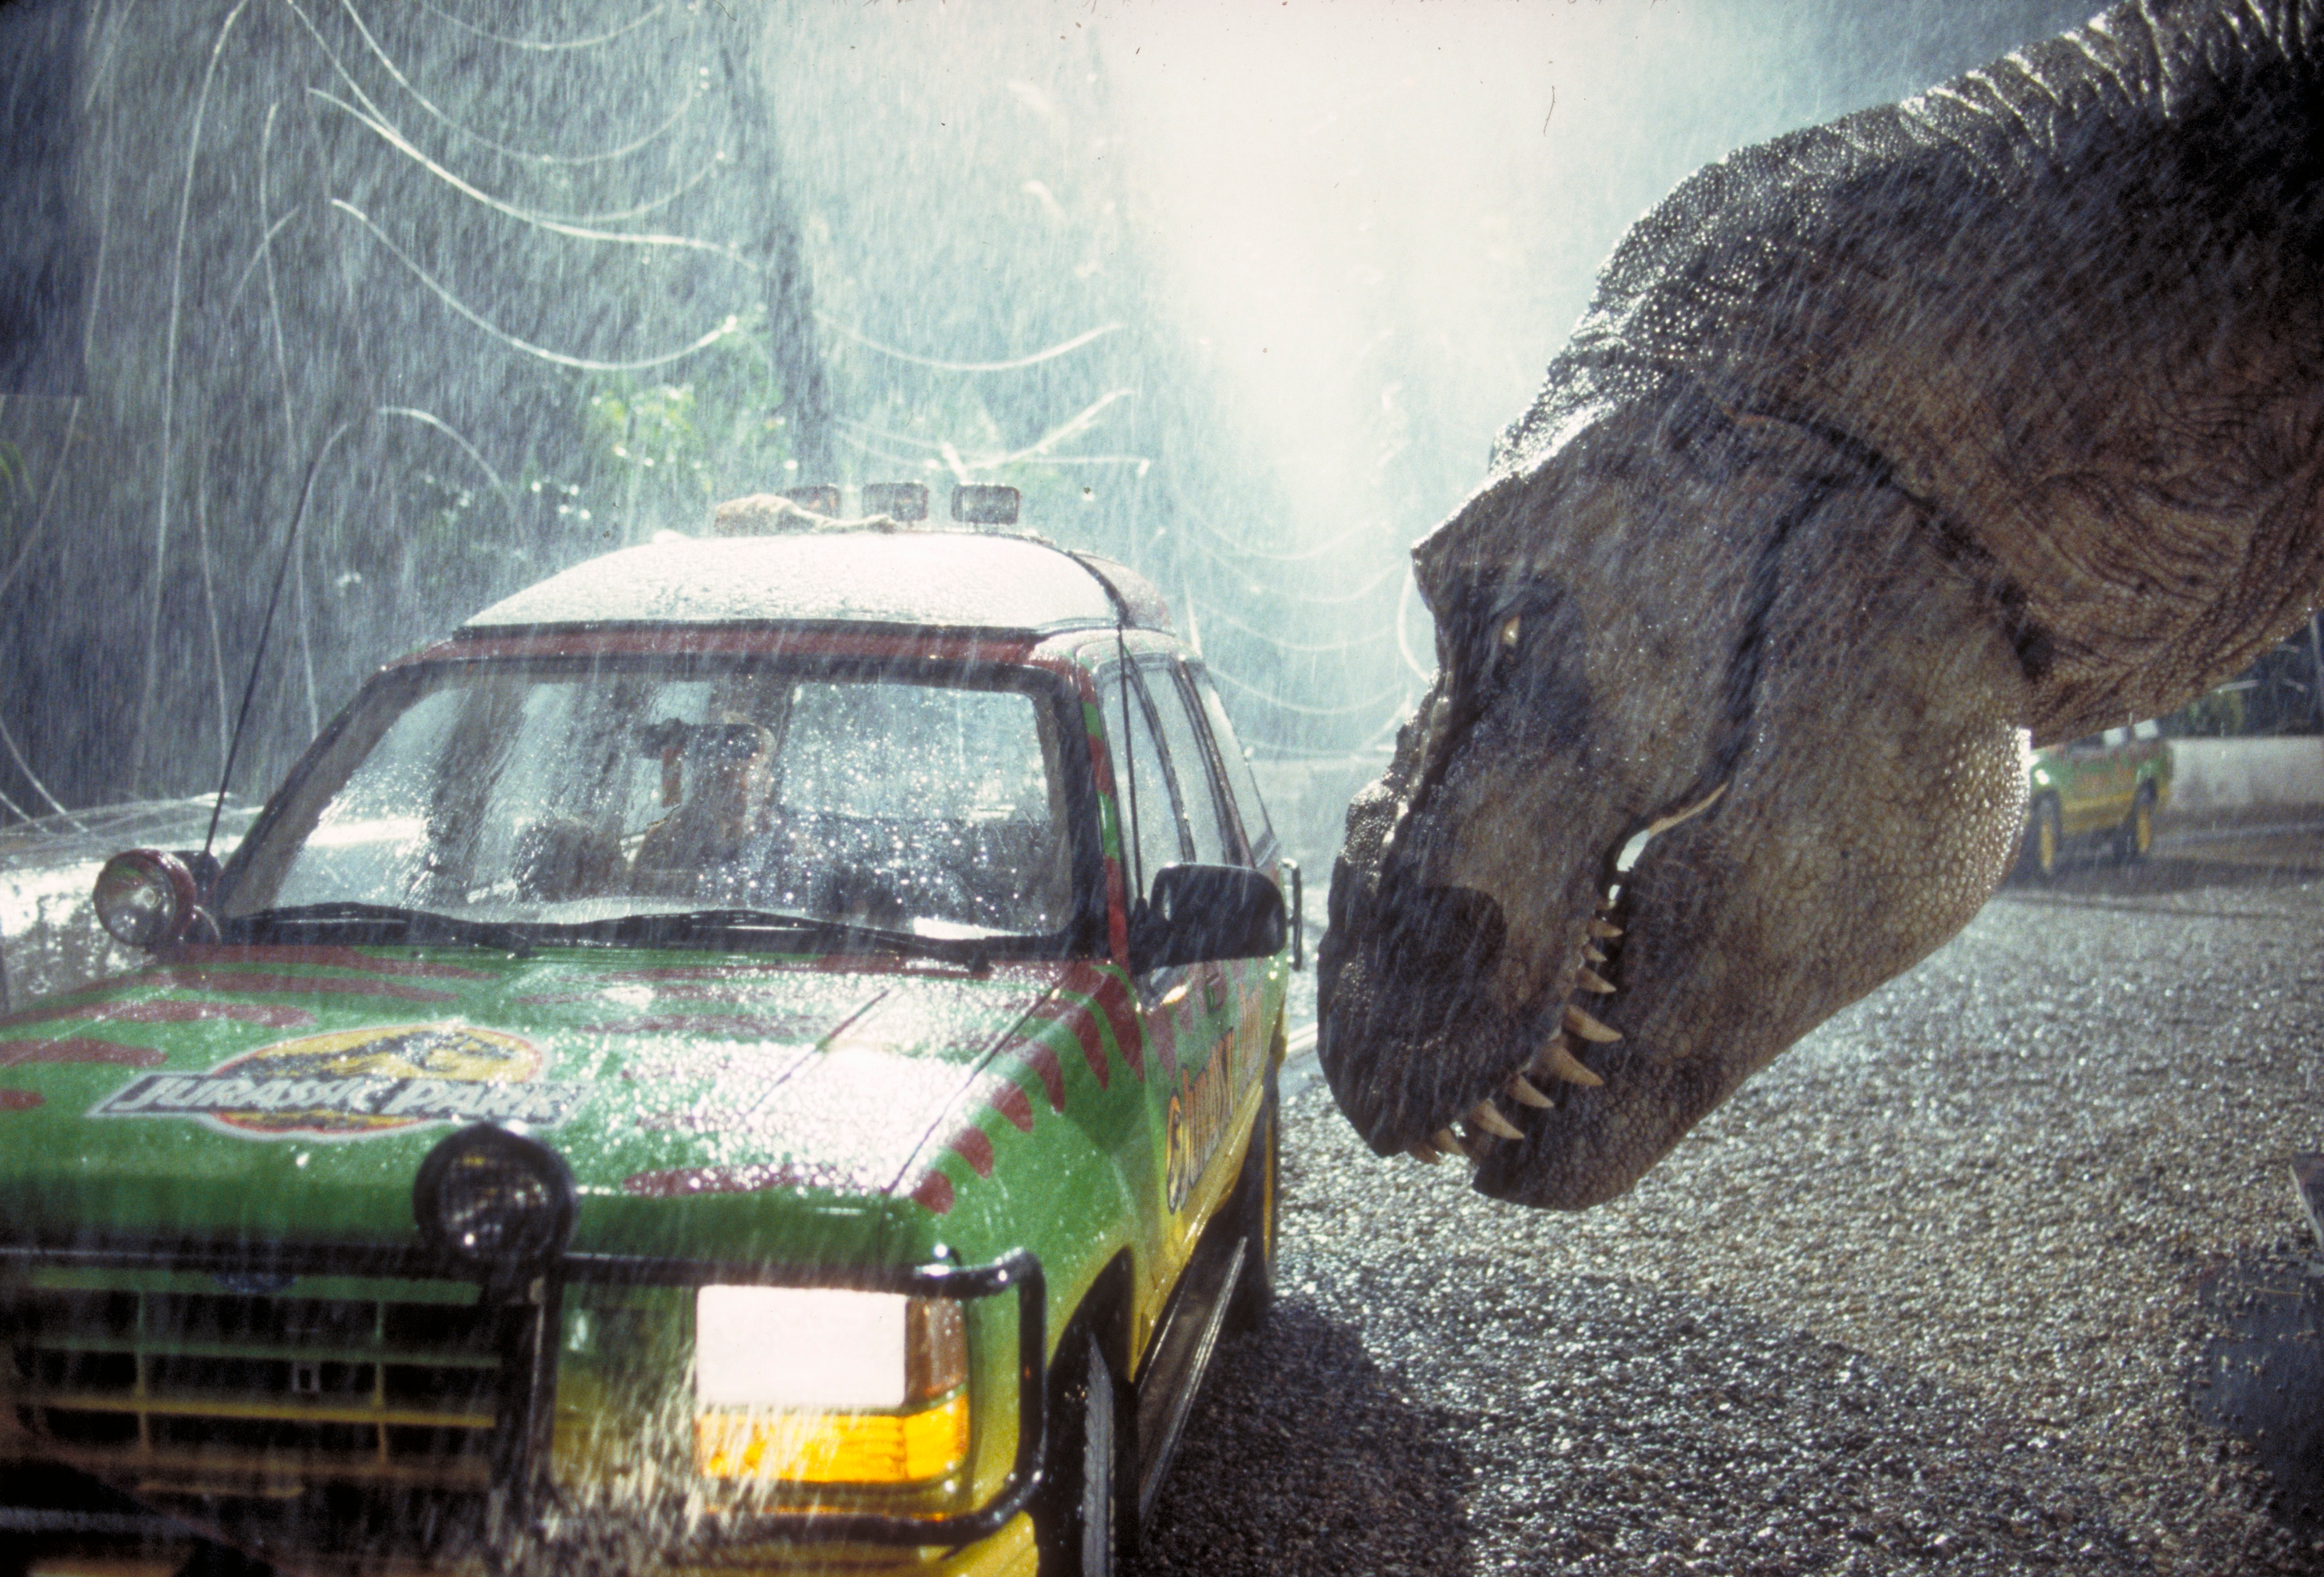 4. Jurassic Park (1993) - Groundbreaking Technical Strides